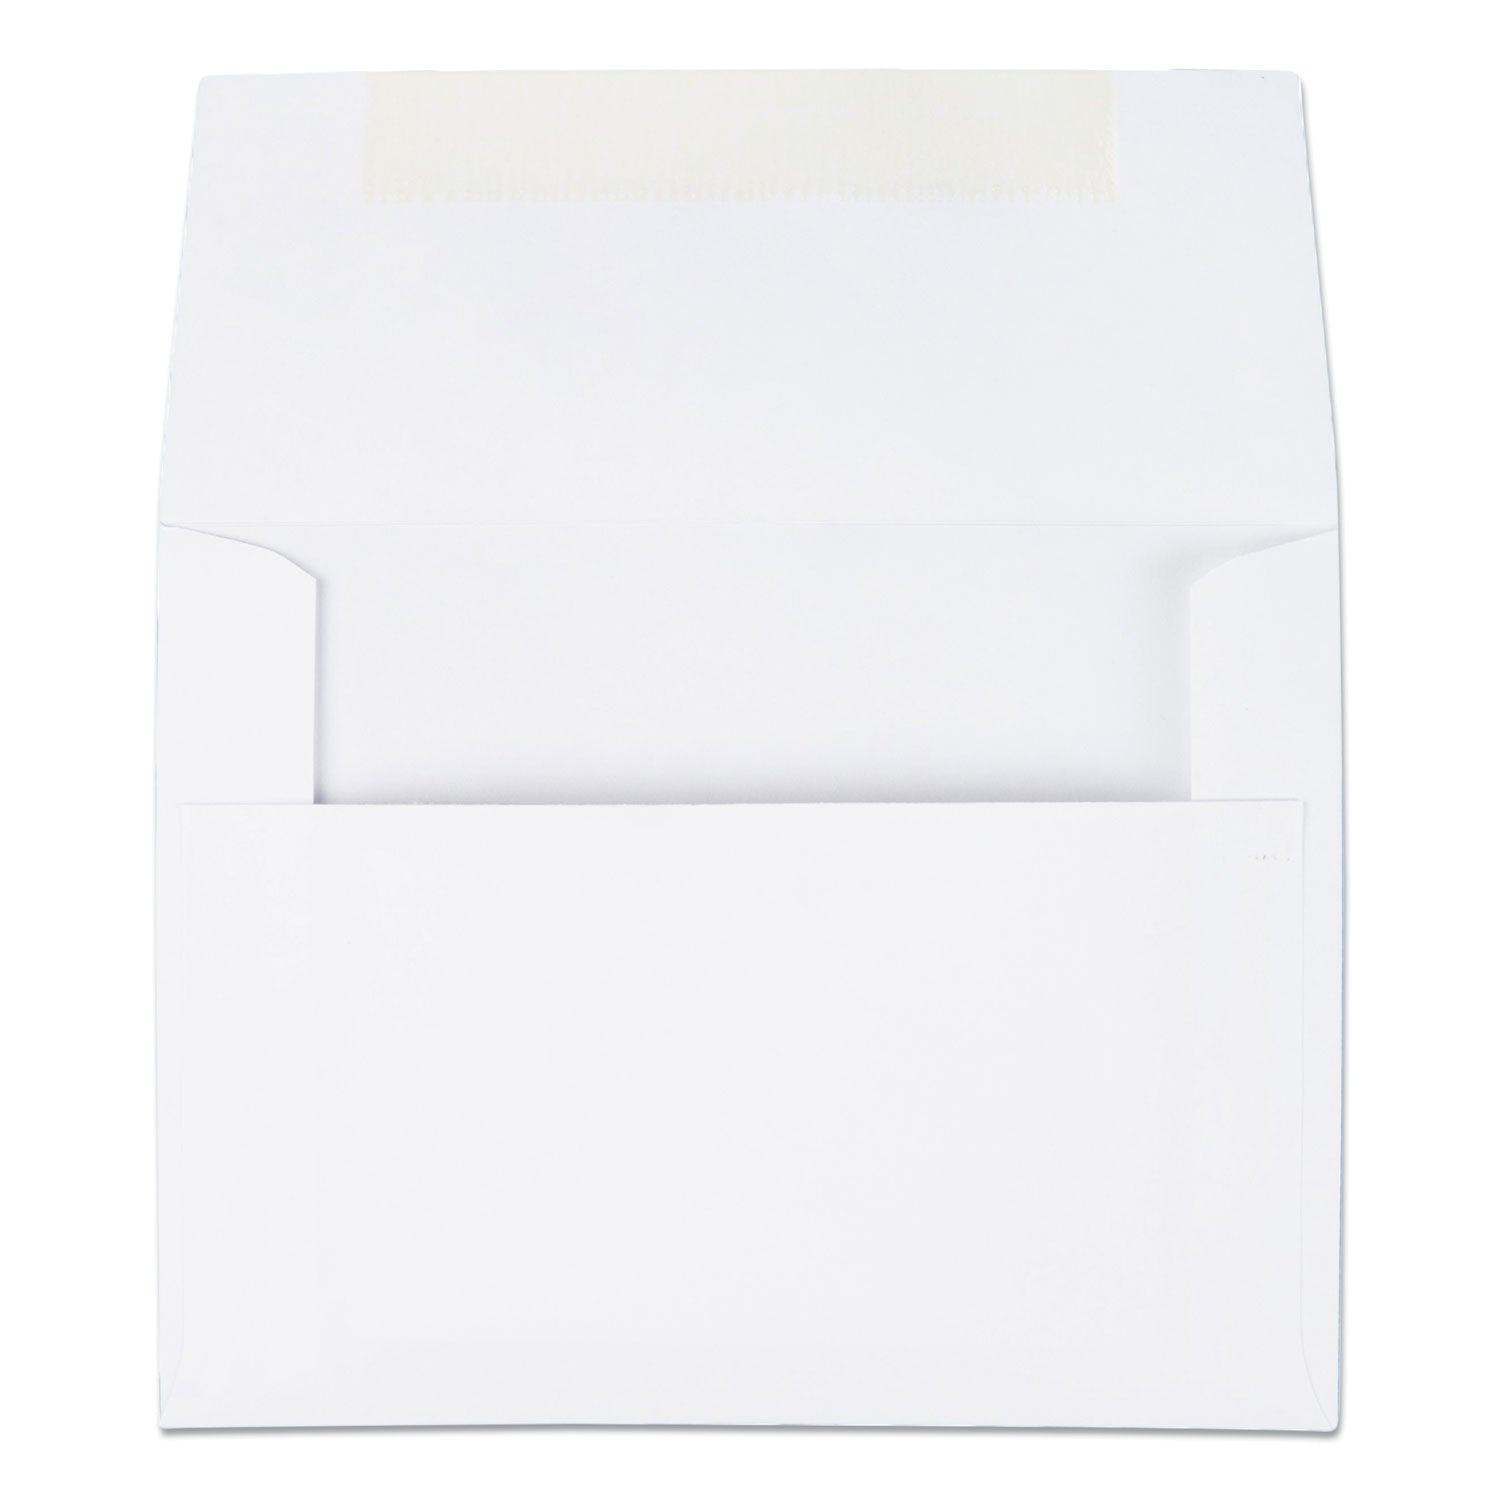 Greeting Card/Invitation Envelope, A-2, Square Flap, Gummed Closure, 4.38 x 5.75, White, 100/Box - 